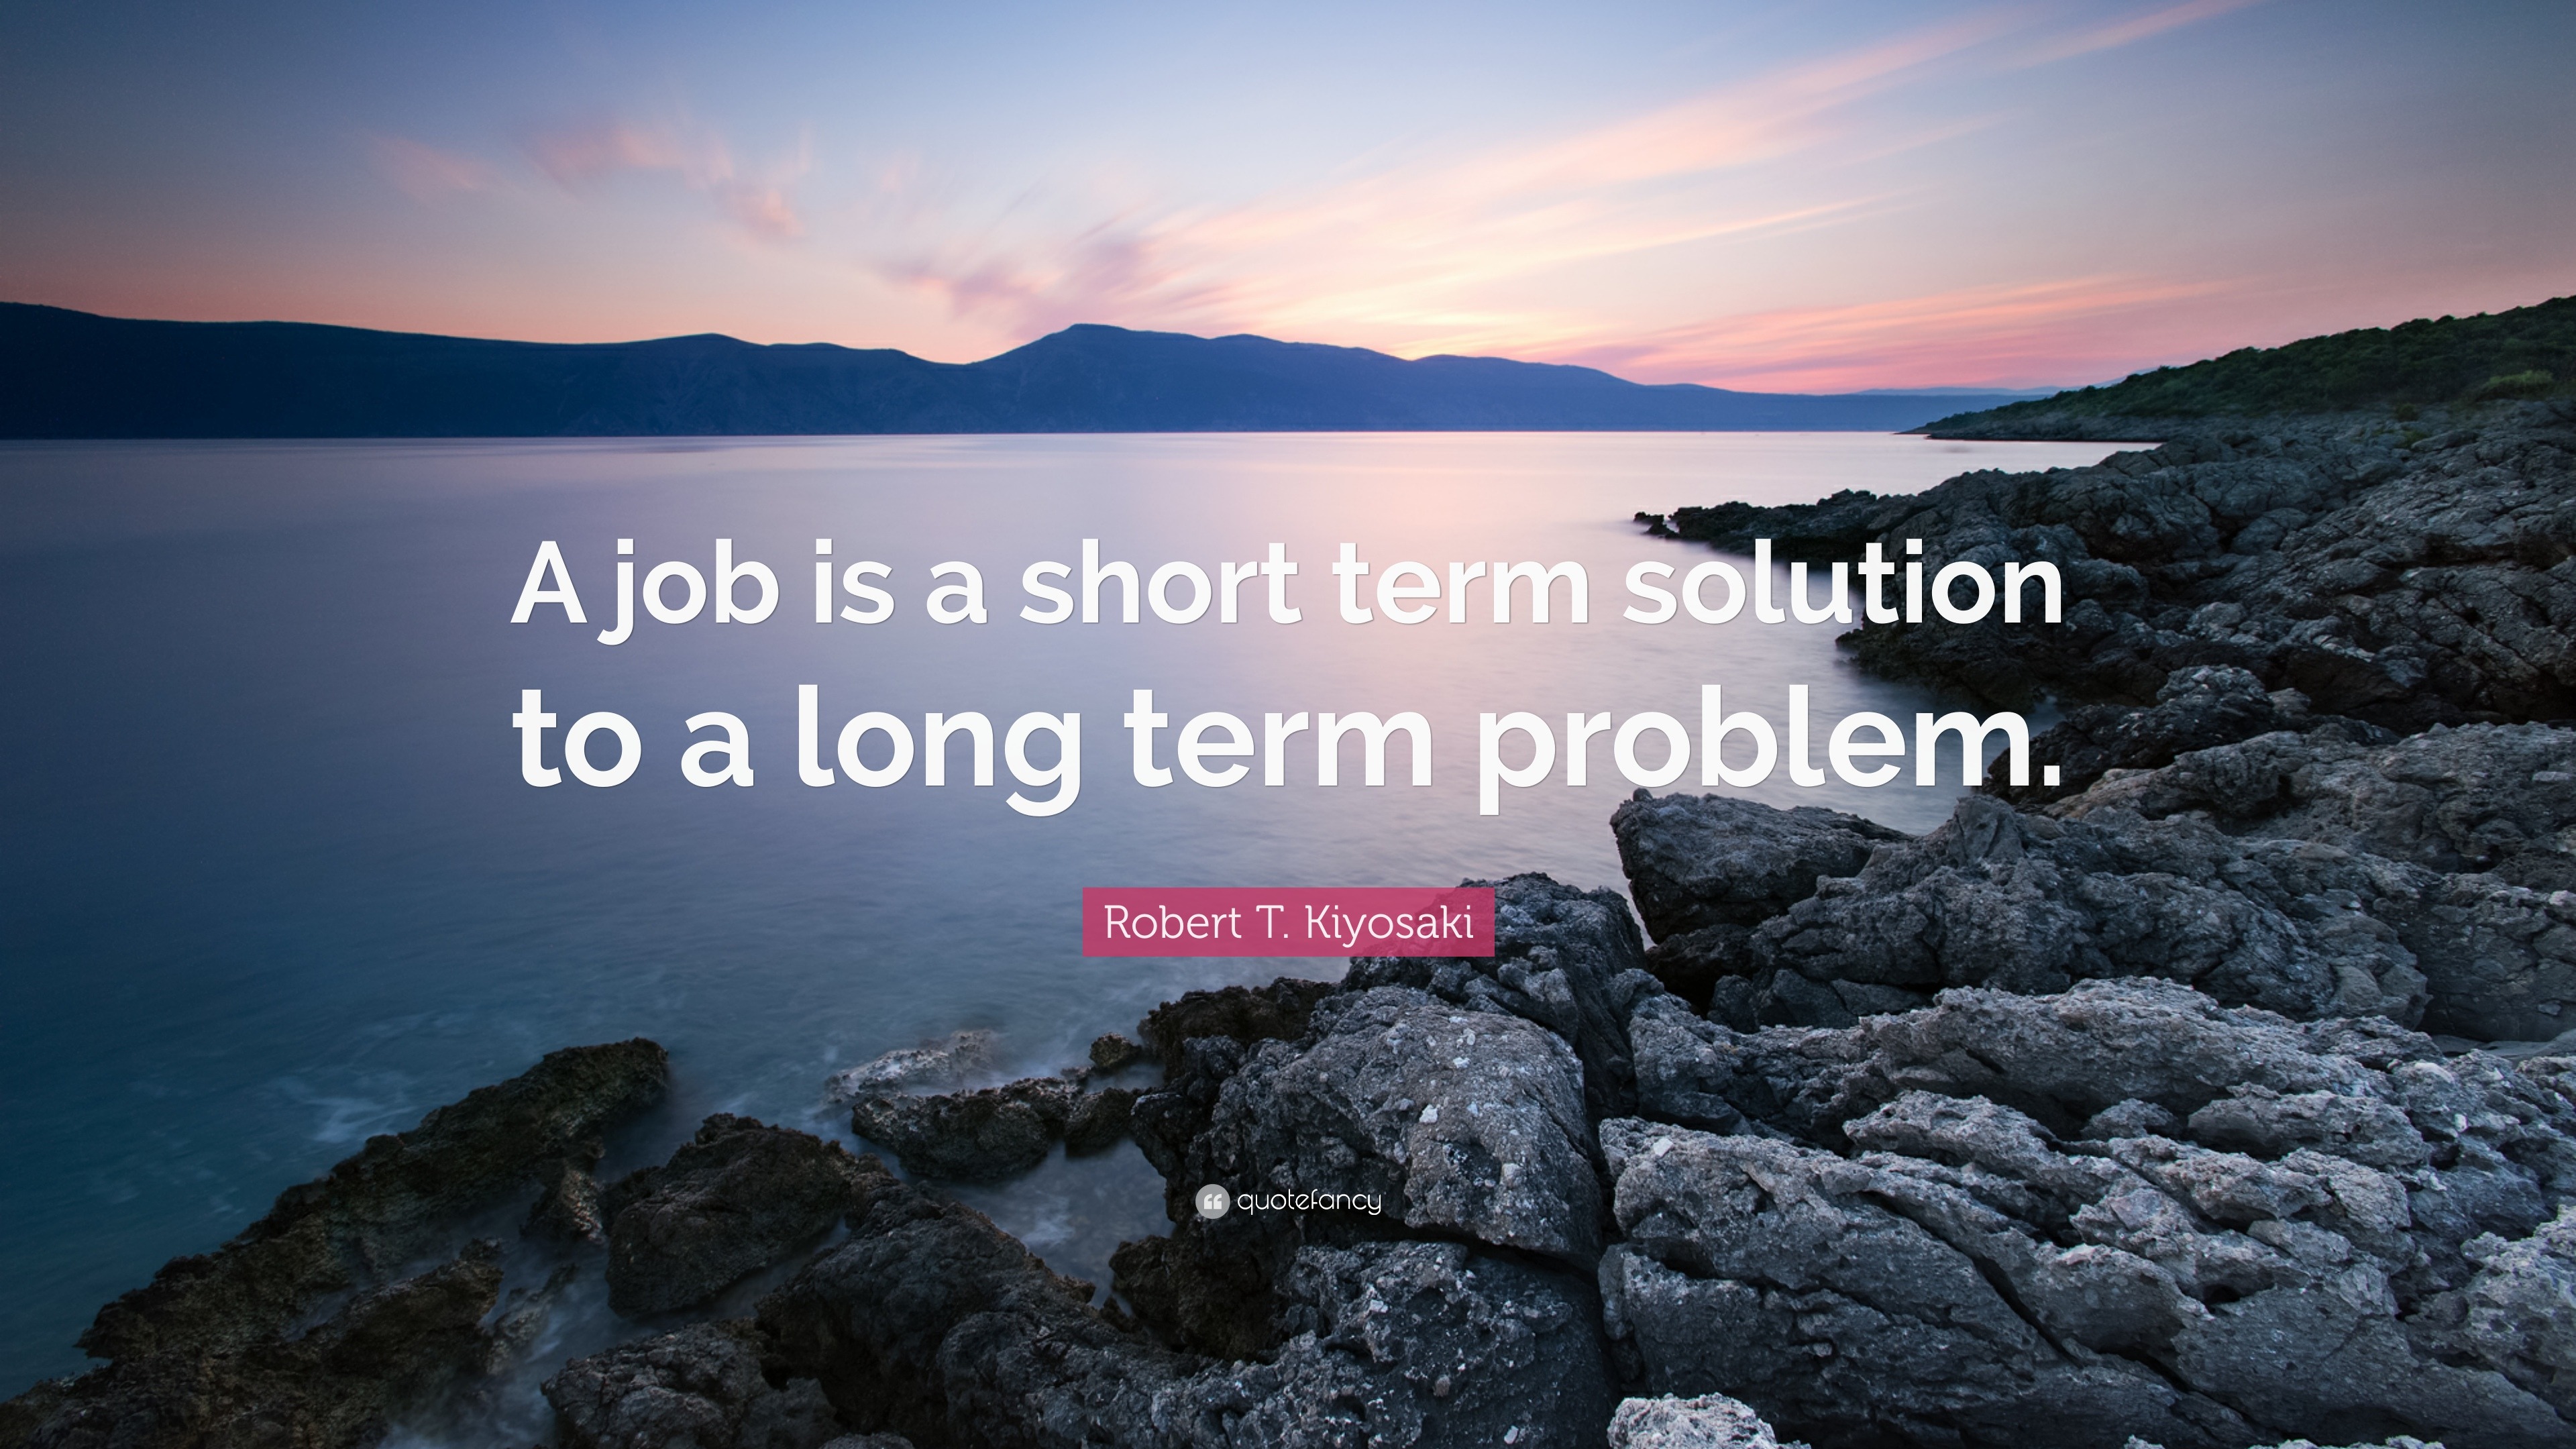 Robert T. Kiyosaki Quote: “A job is a short term solution to a long term  problem.”